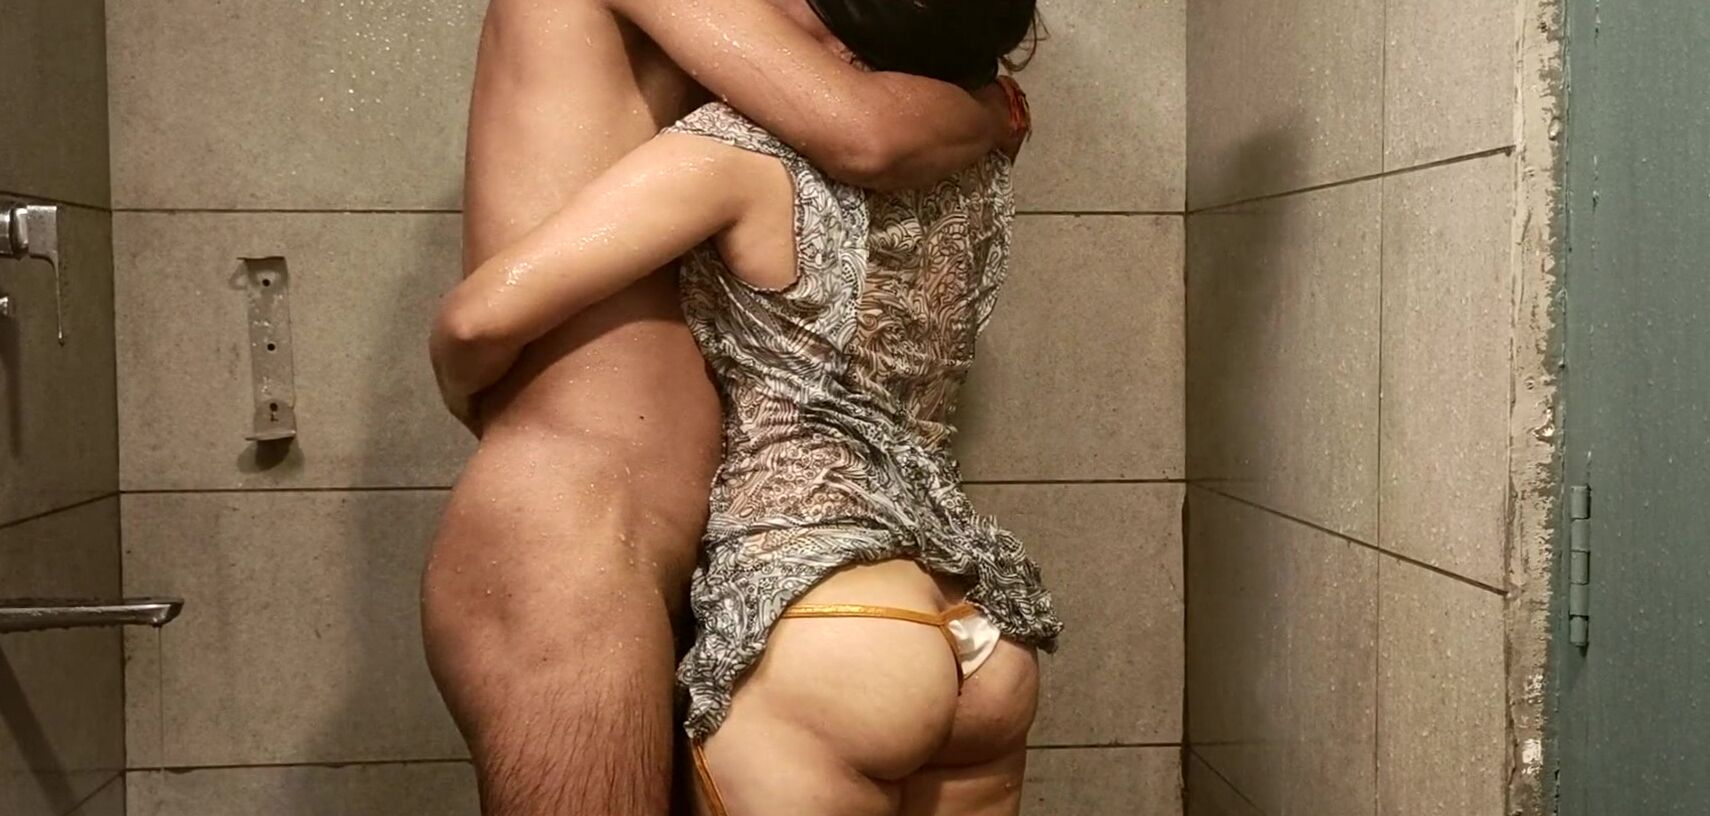 Indian hot desi marathi wife got fucked while taking shower in bathroom - XXX Video